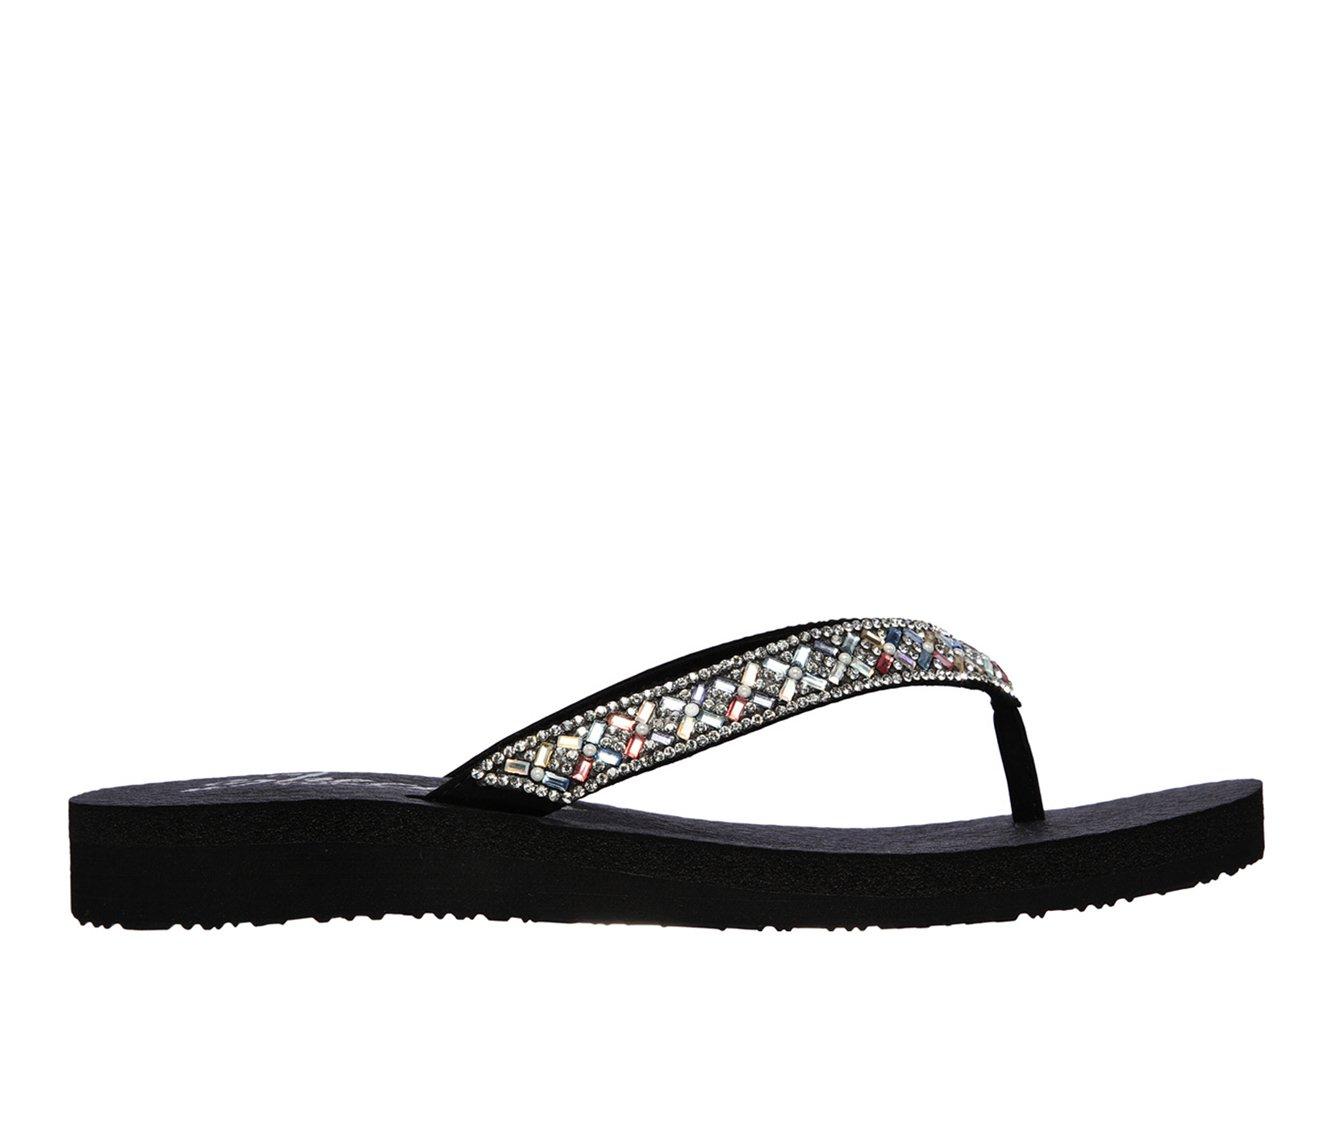 aanplakbiljet Compliment wet Women's Skechers Cali Sandals: Casual Sandals, Rhinestone...